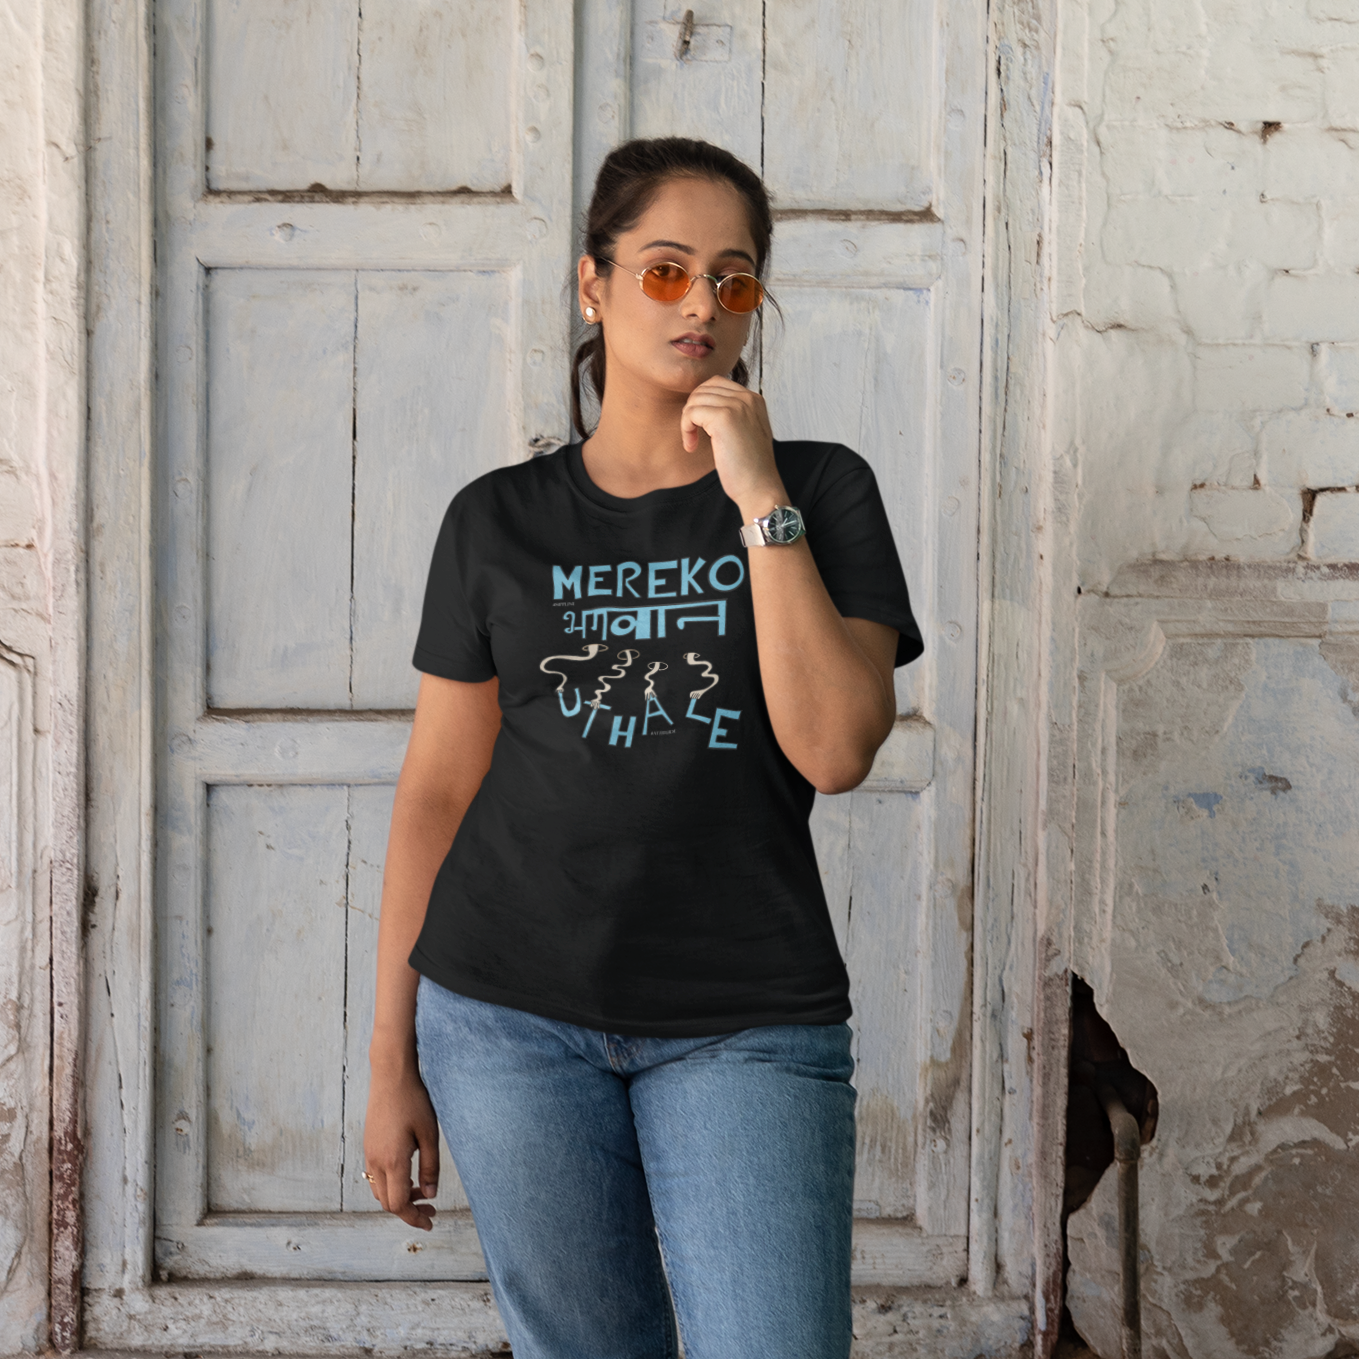 Sippline Digital Print Unisex Cotton T-Shirt 05 Mereko Bhagwan Uthale - Black